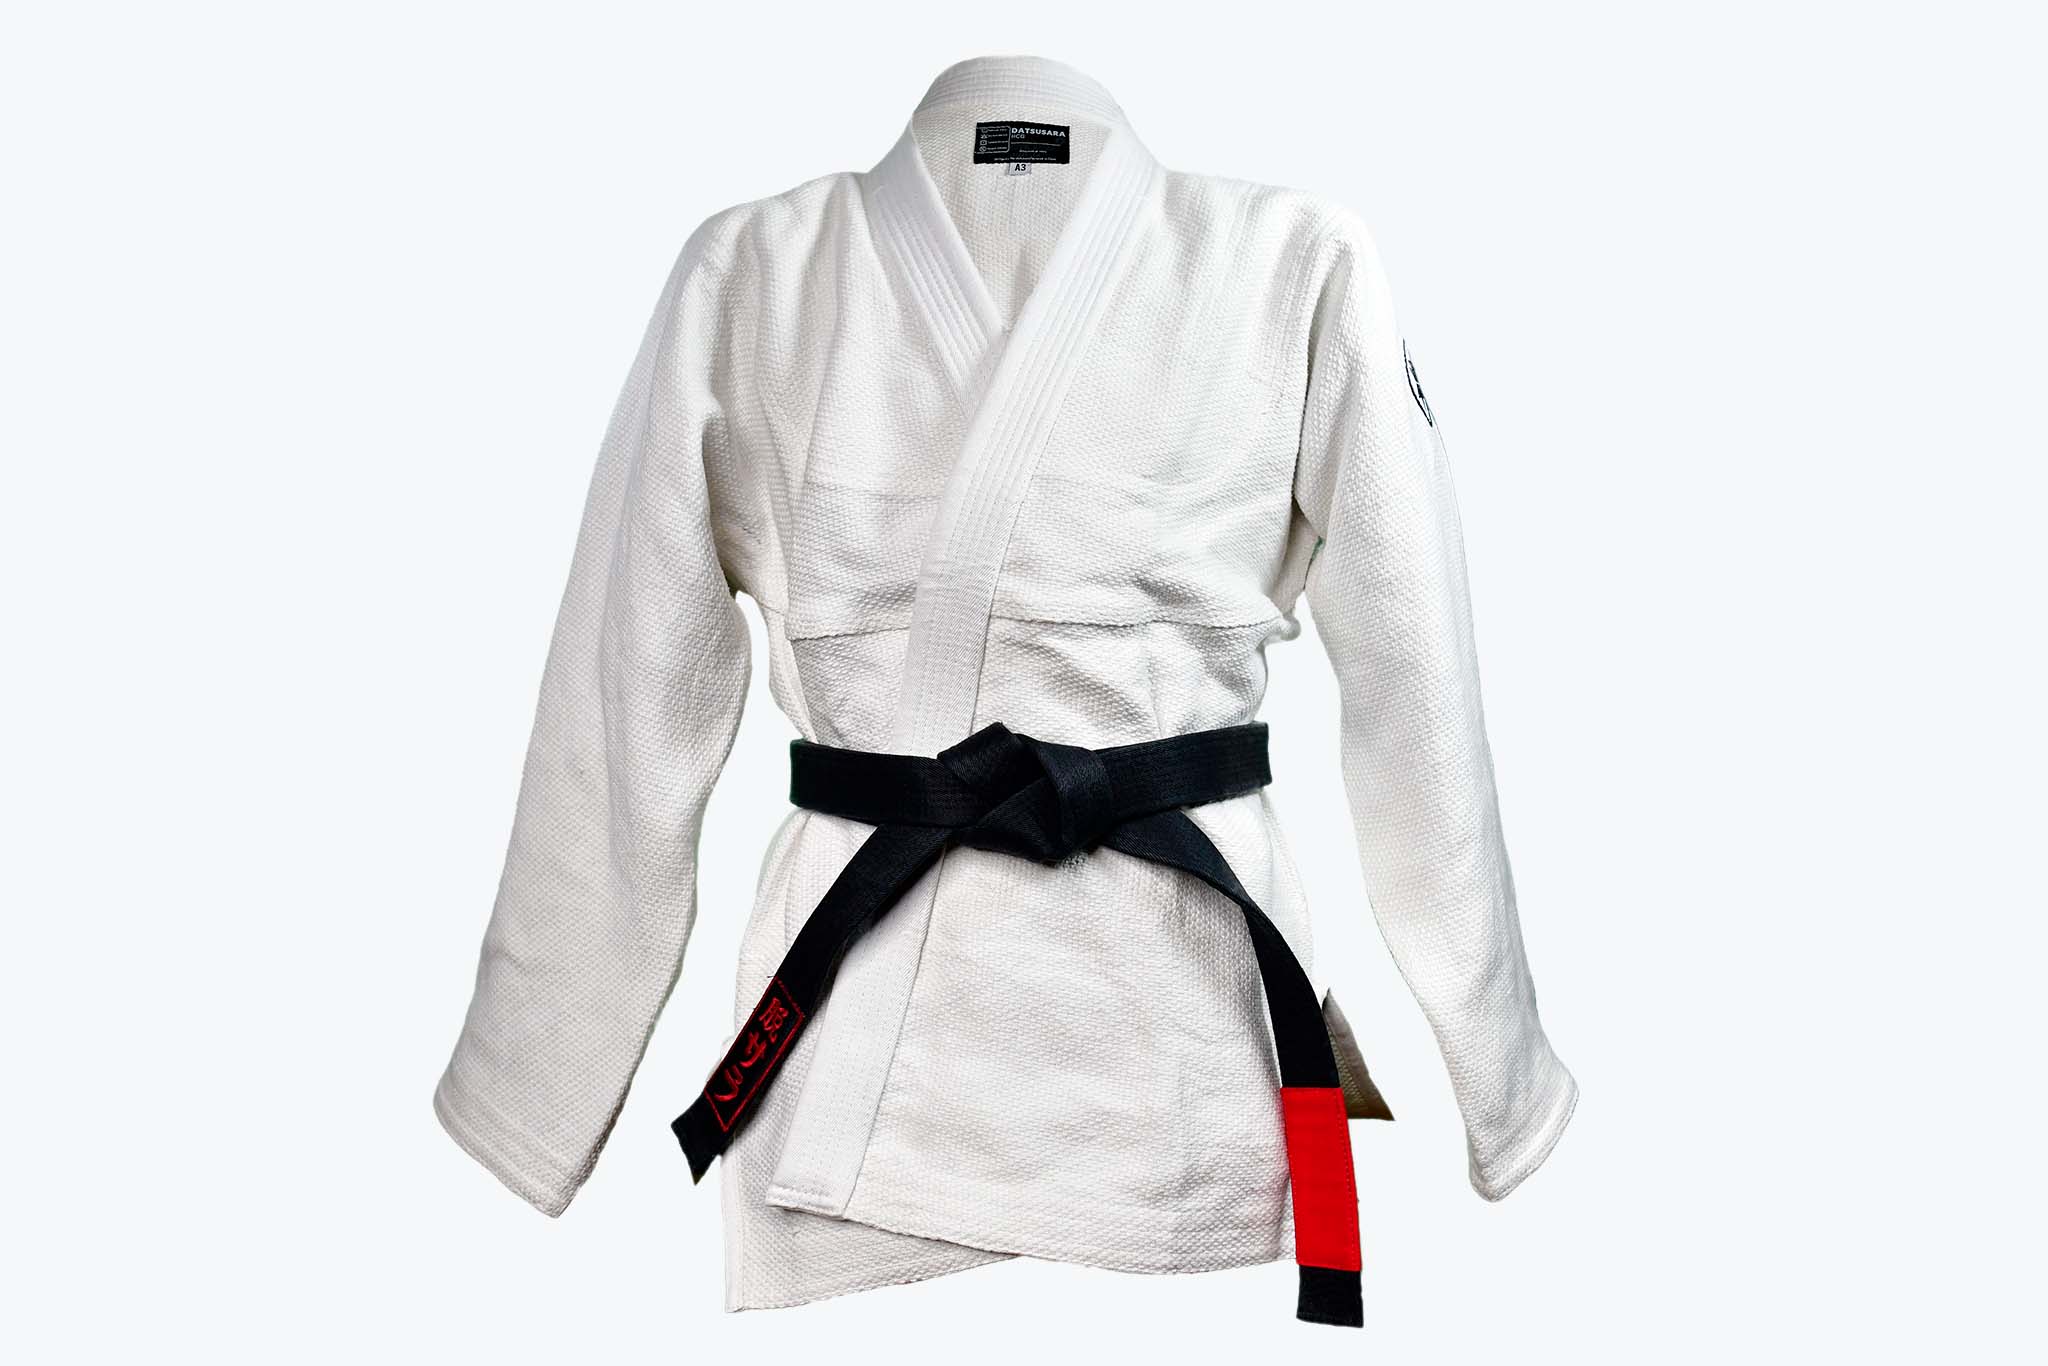 Kingz The ONE Jiu Jitsu Gi - FREE White Belt, Fighters Market